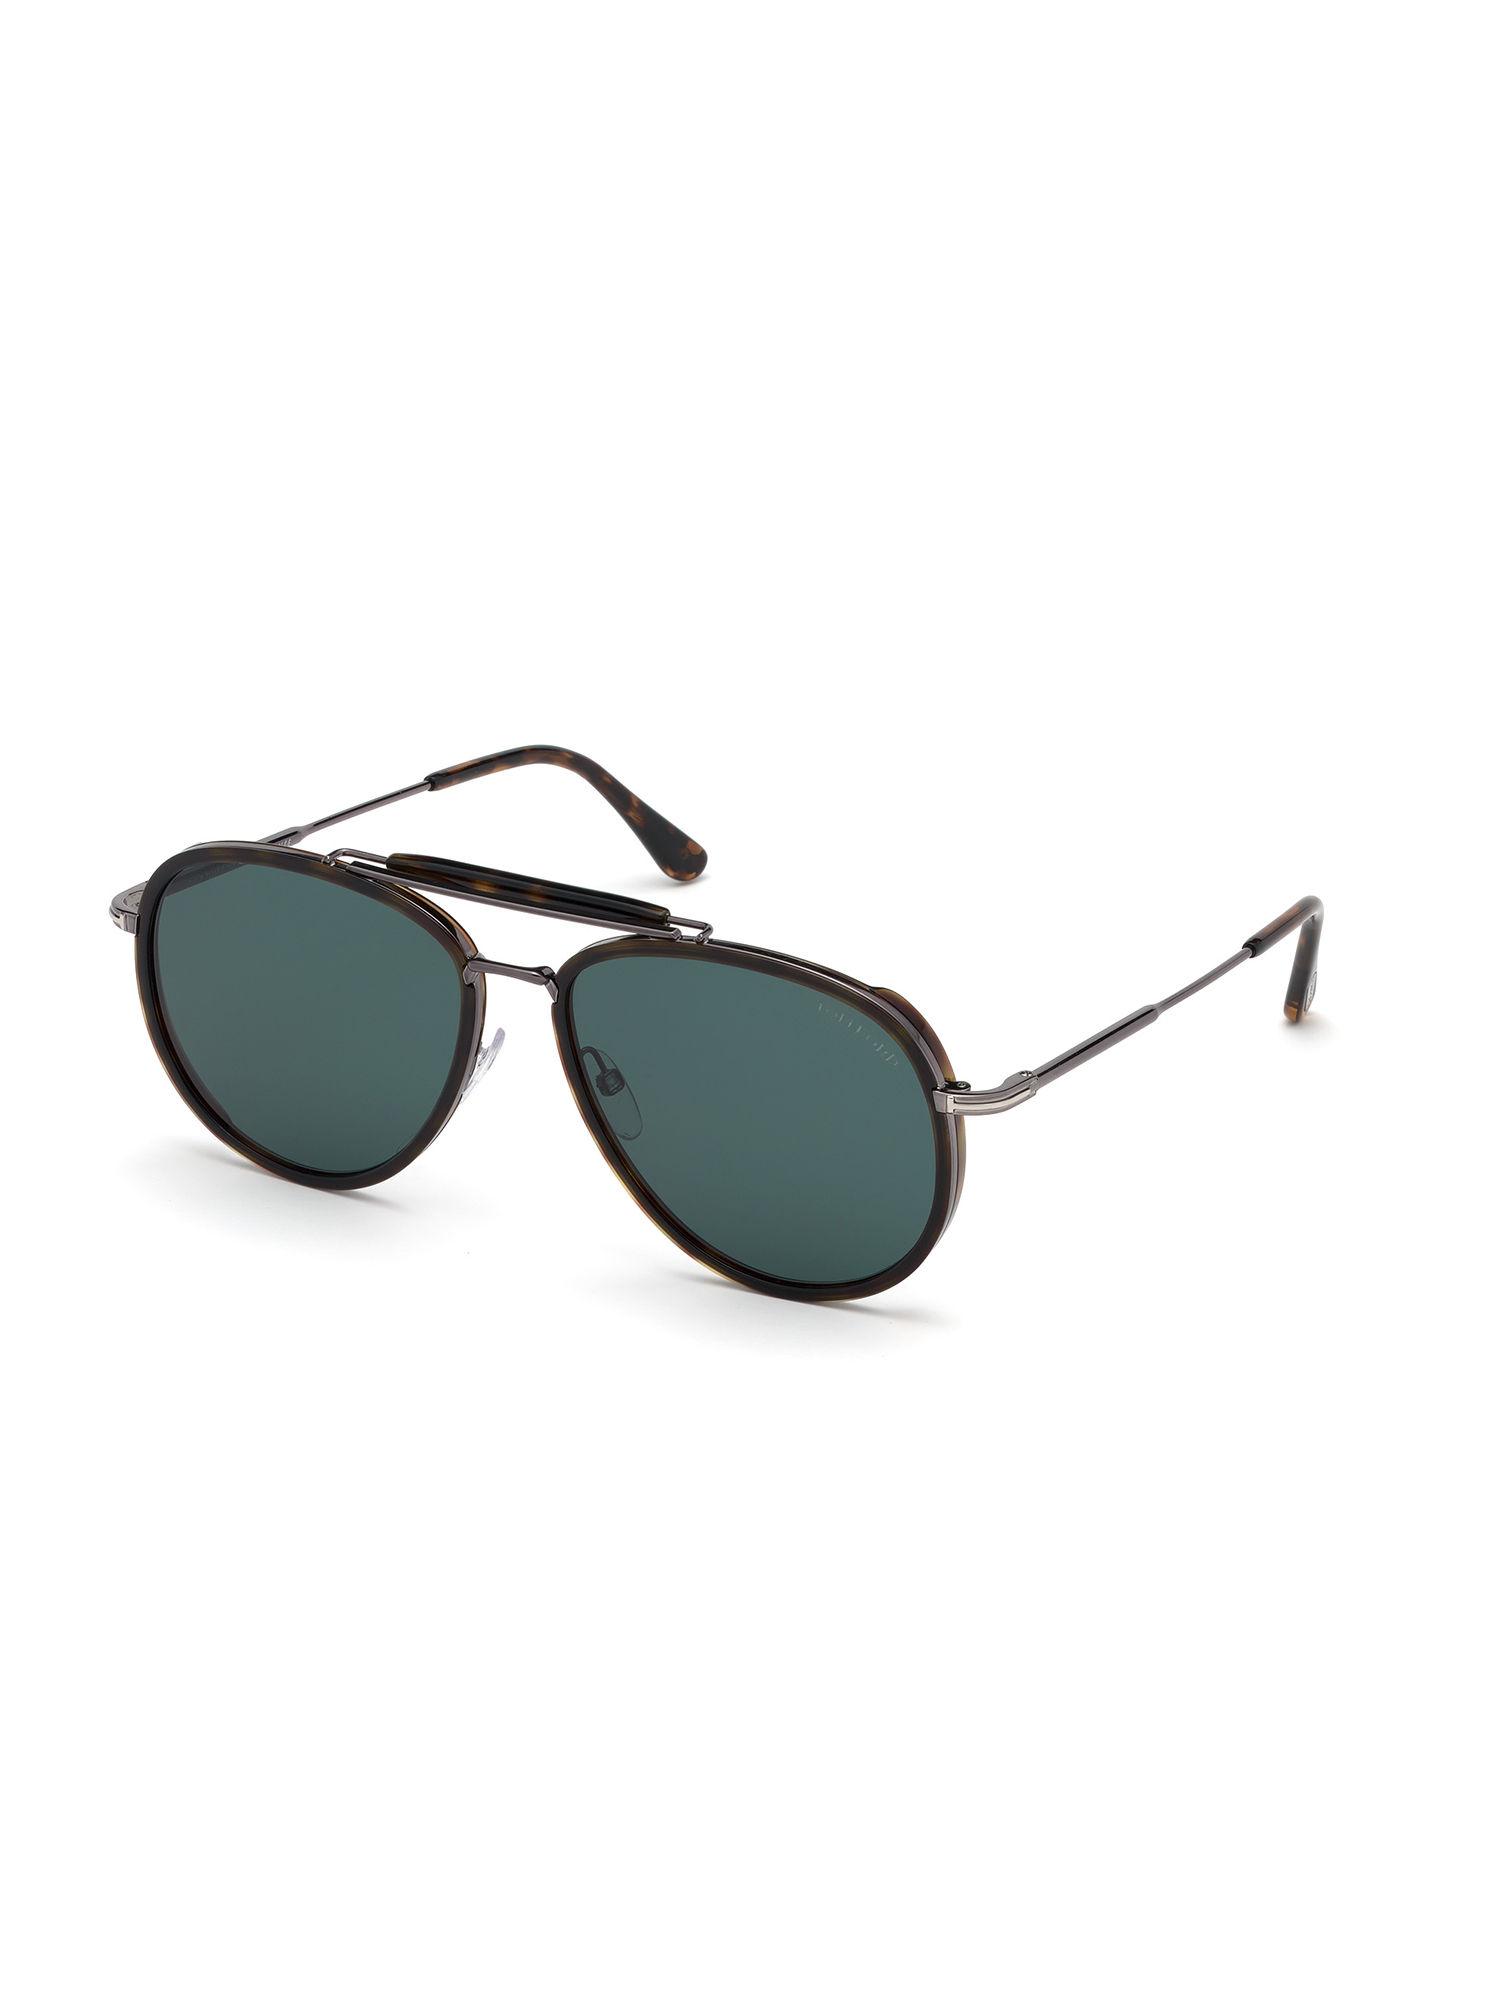 brown-aviator-sunglasses---ft0666-60-52n